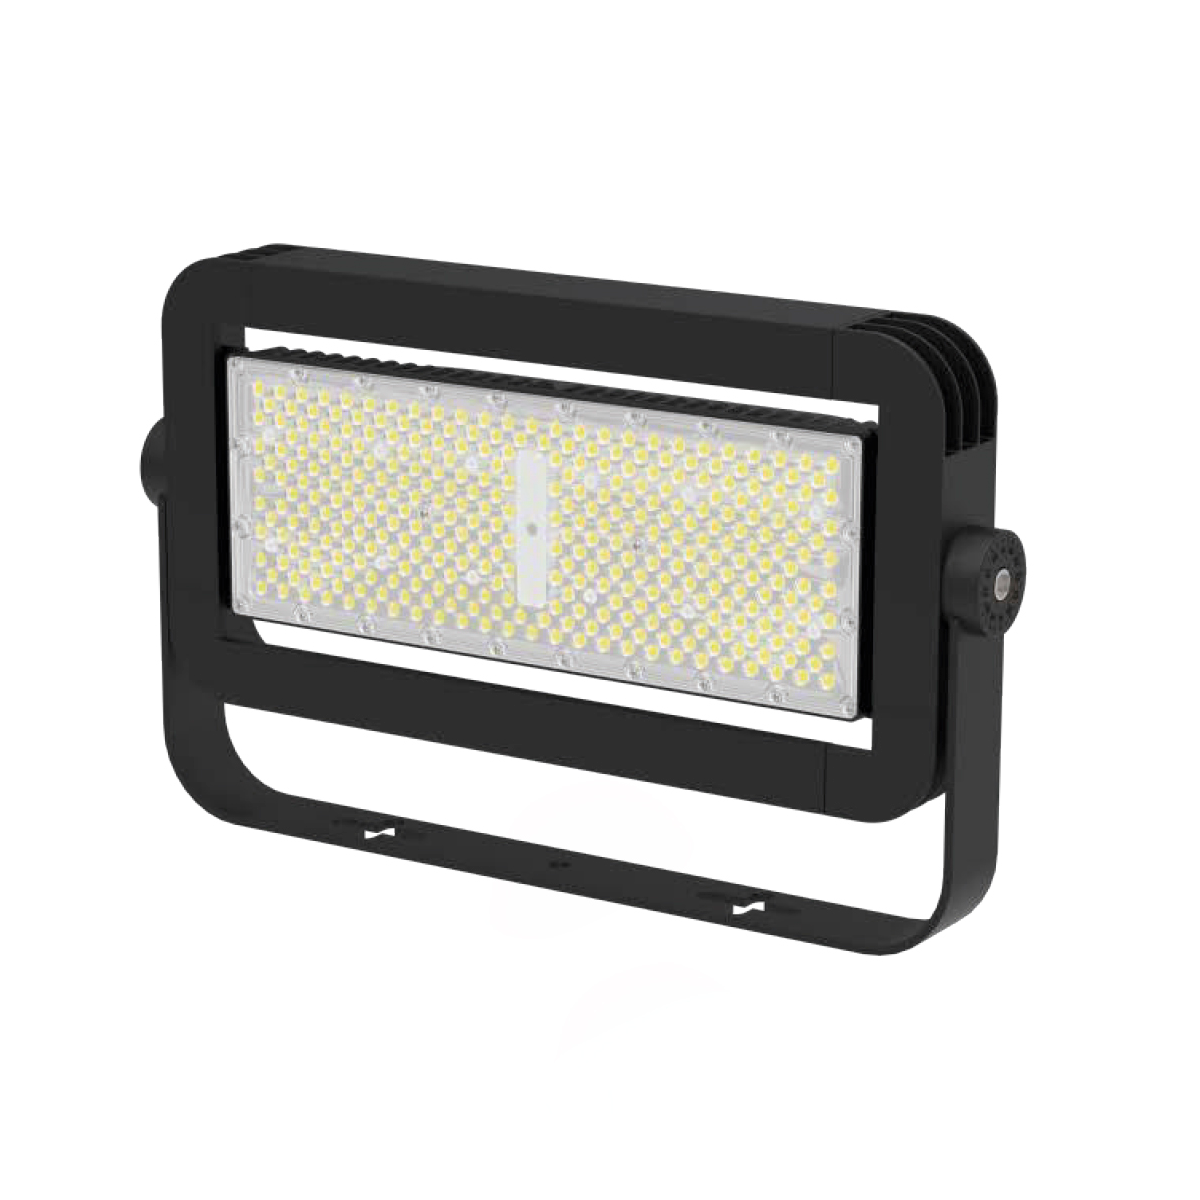 [L1244] [L1244] LAMPARA LED TIPO REFLECTOR 300W DL NEGRA LIGHT-TEC